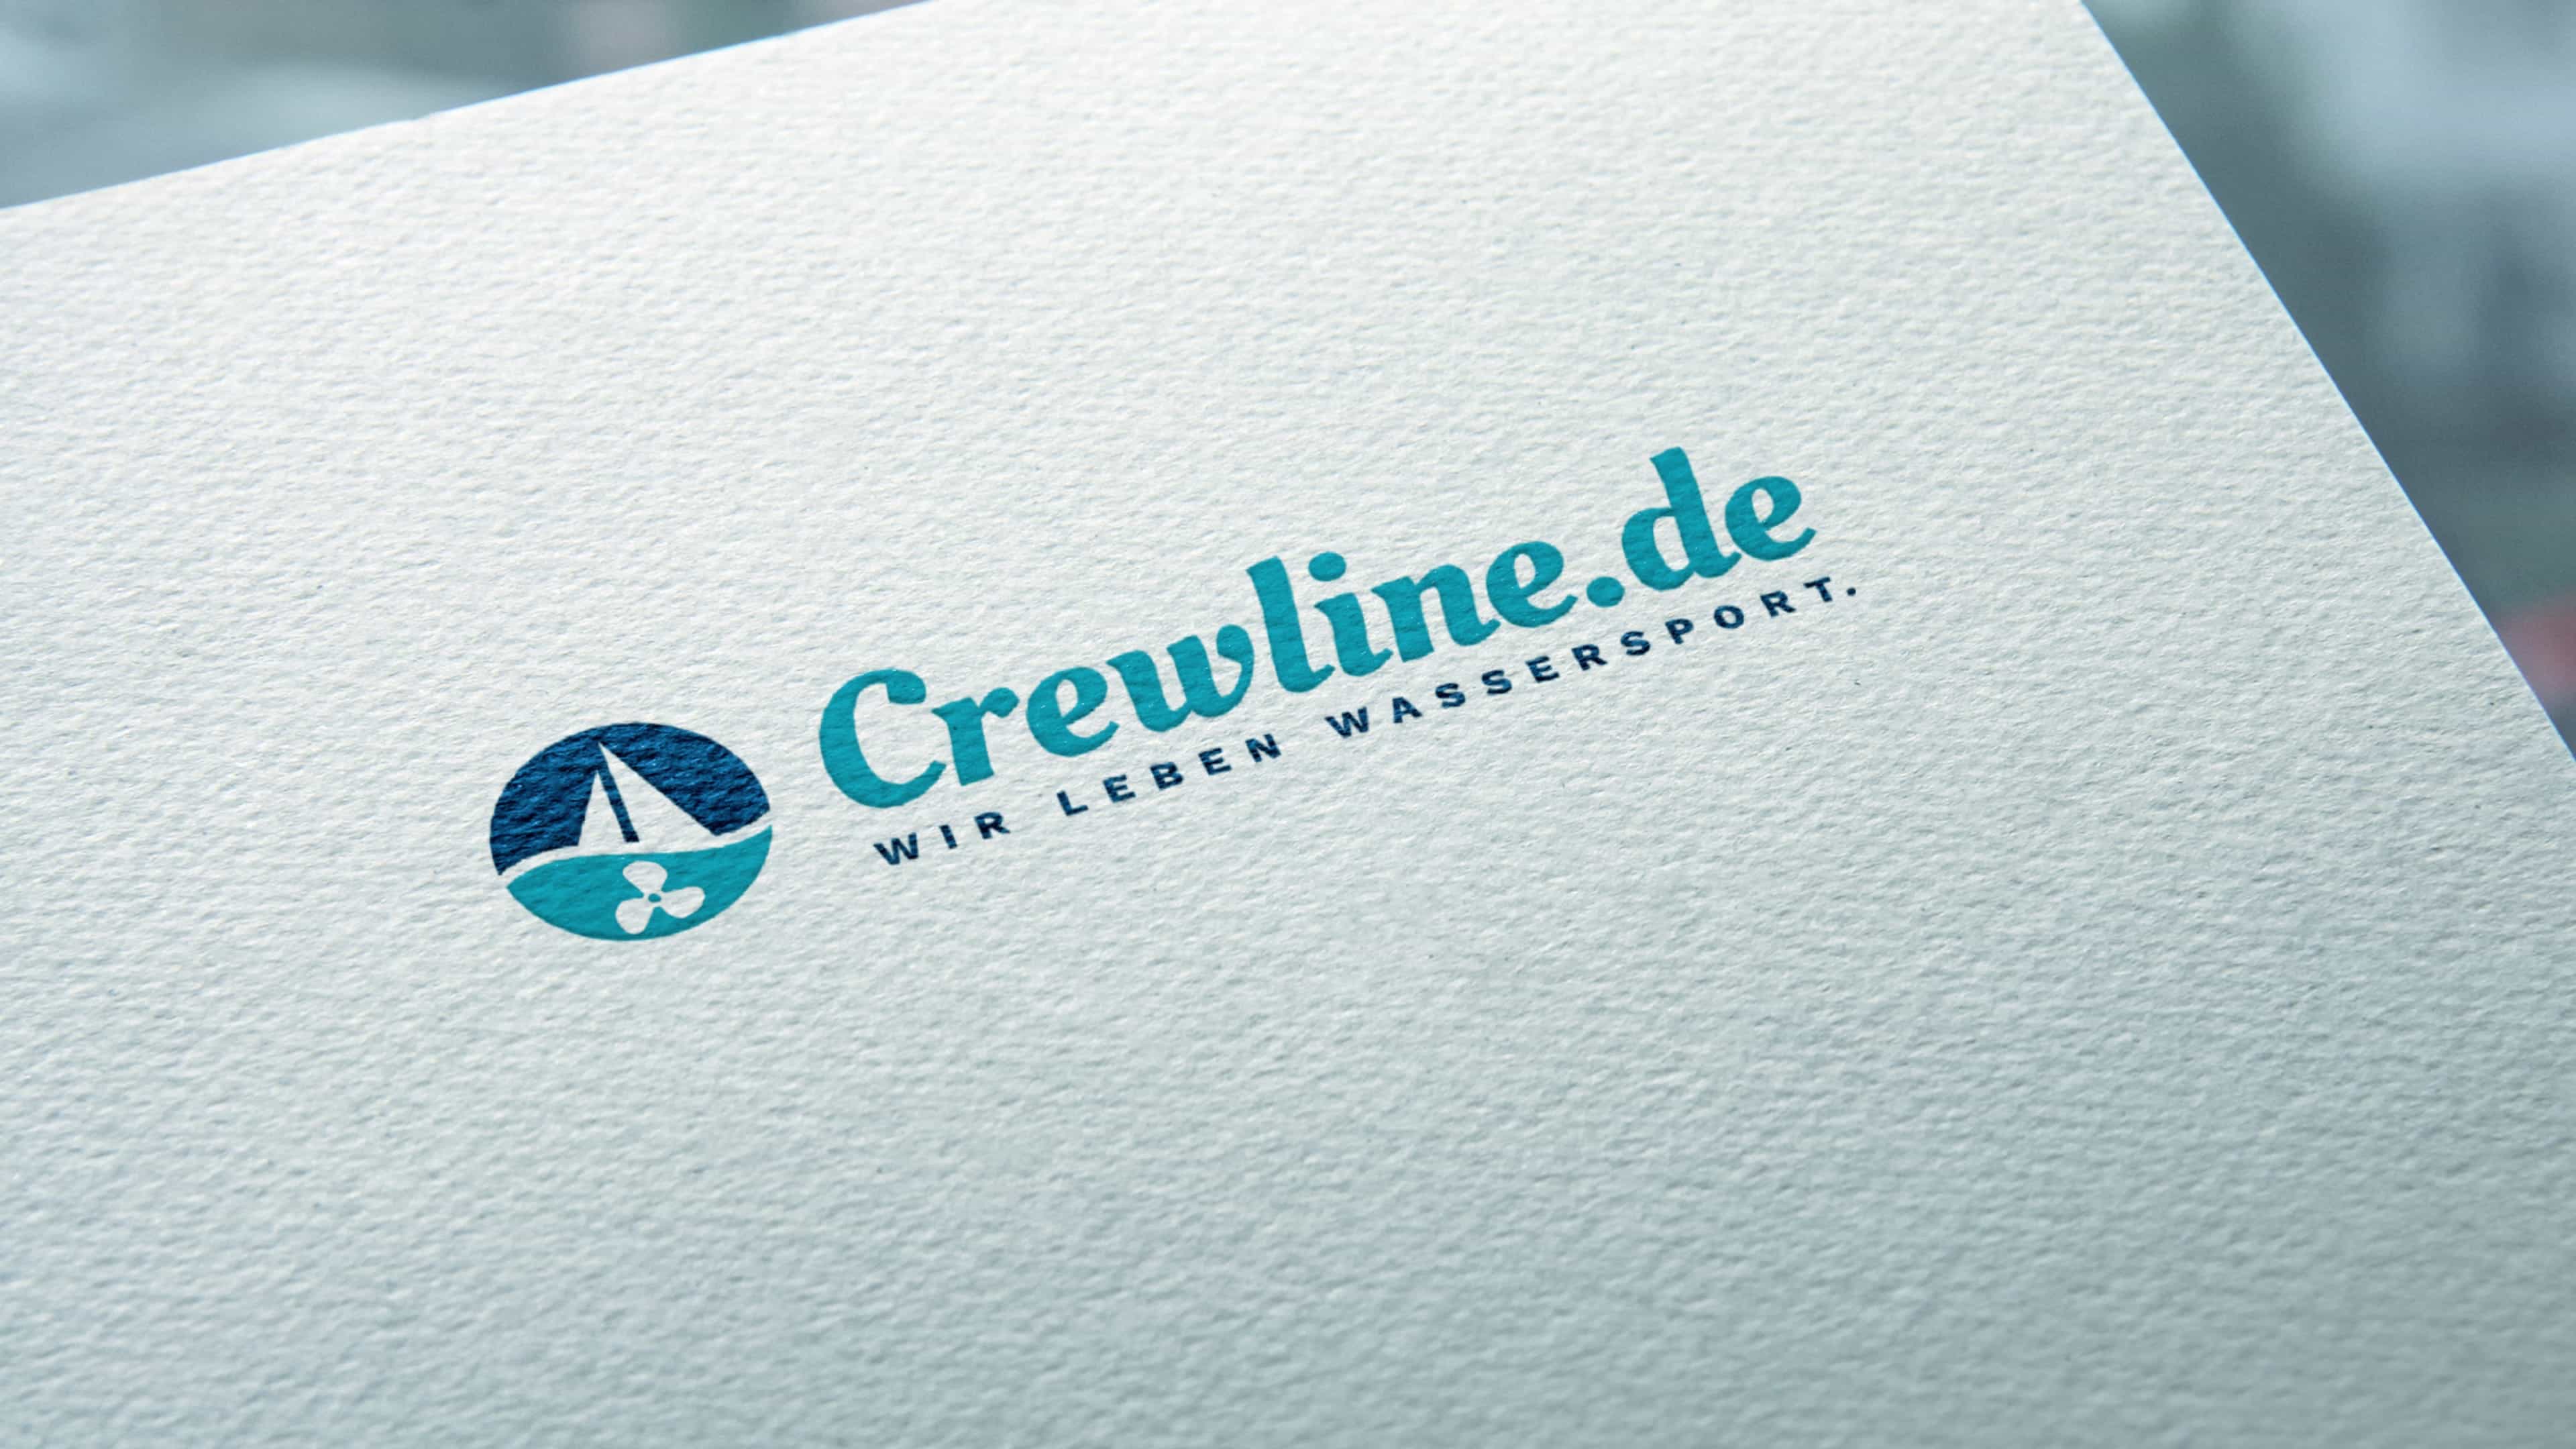 Geschäftspapier mit türkis-blauem Logo Crewline.de